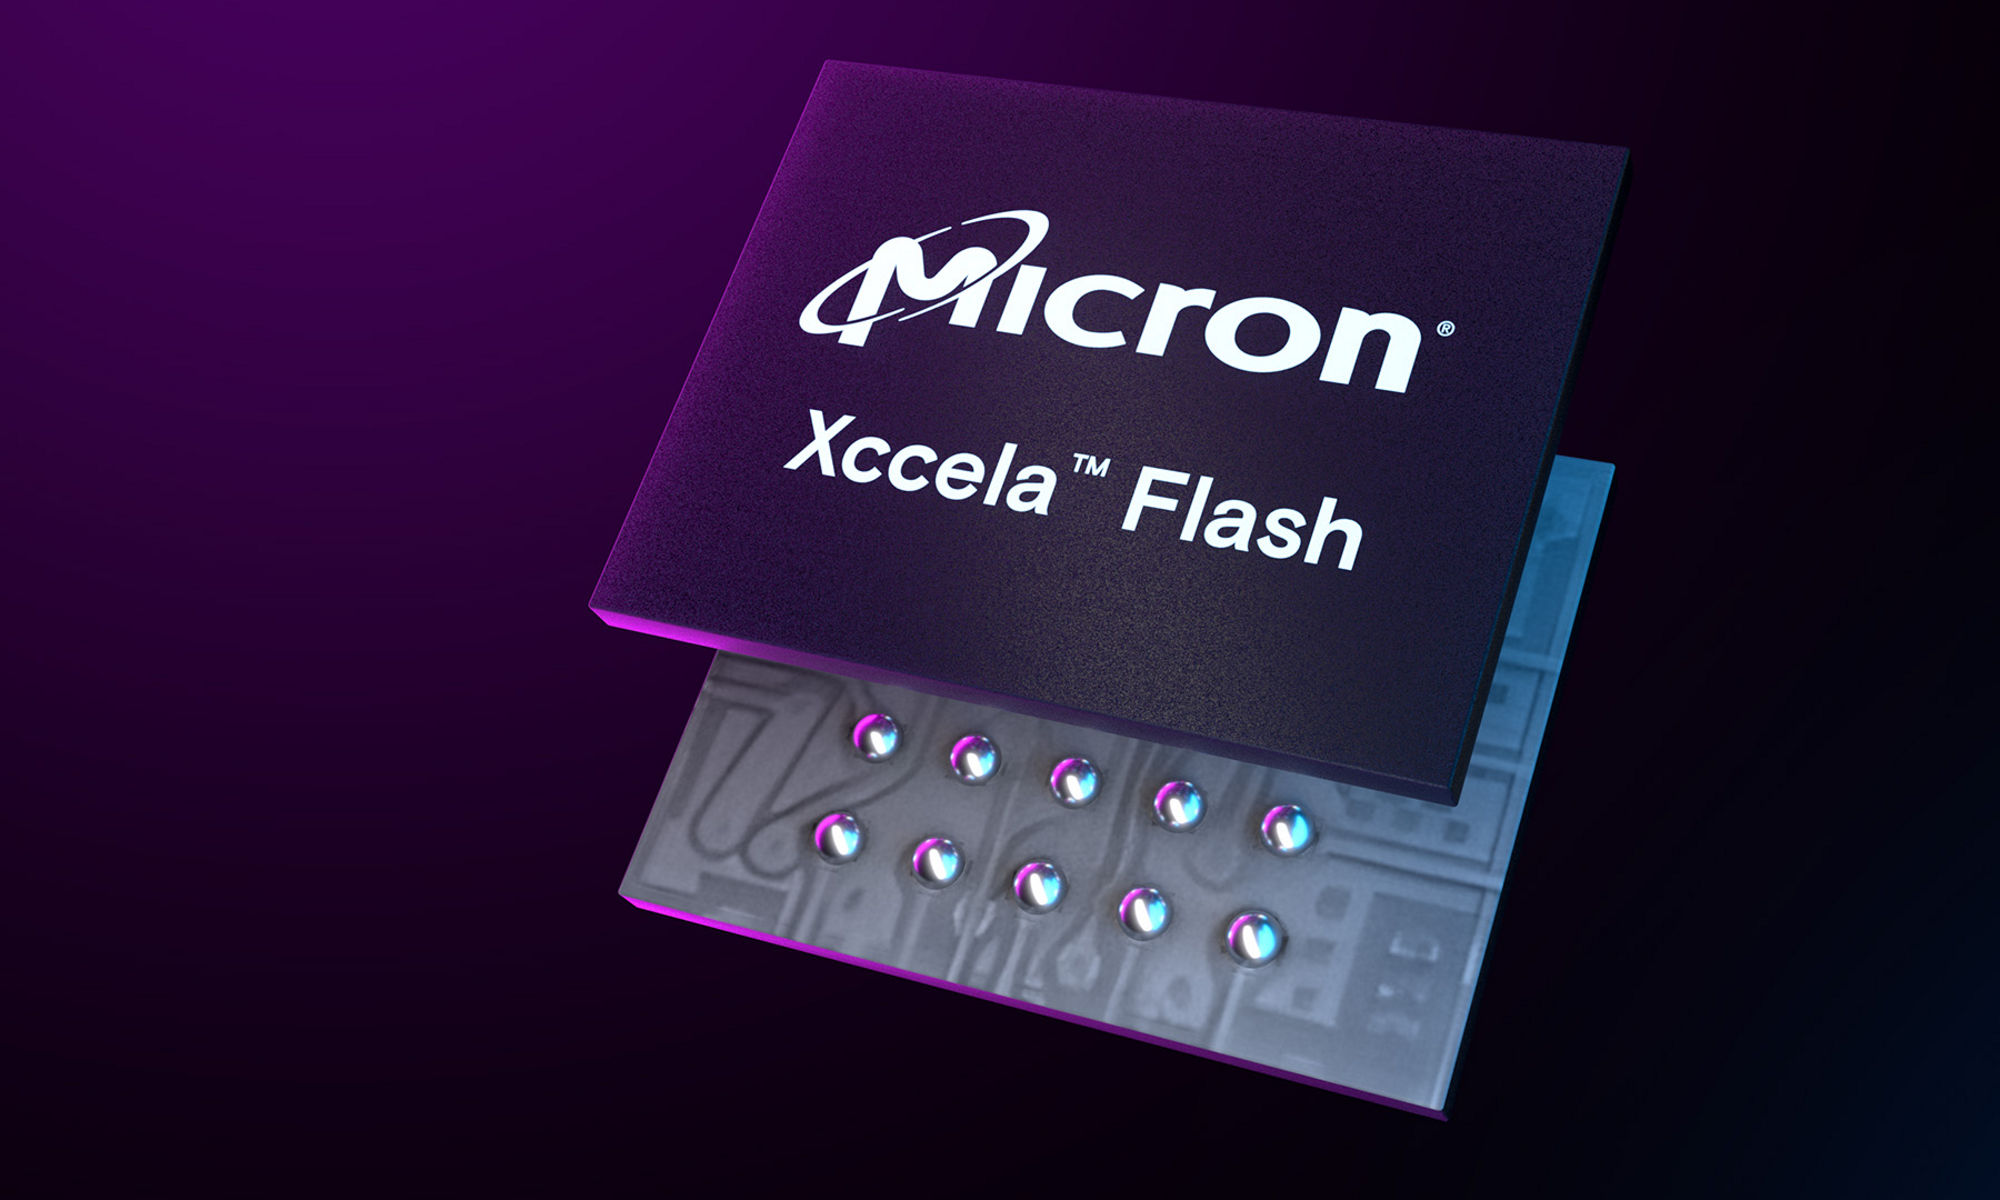 Micron Xccela flash memory product